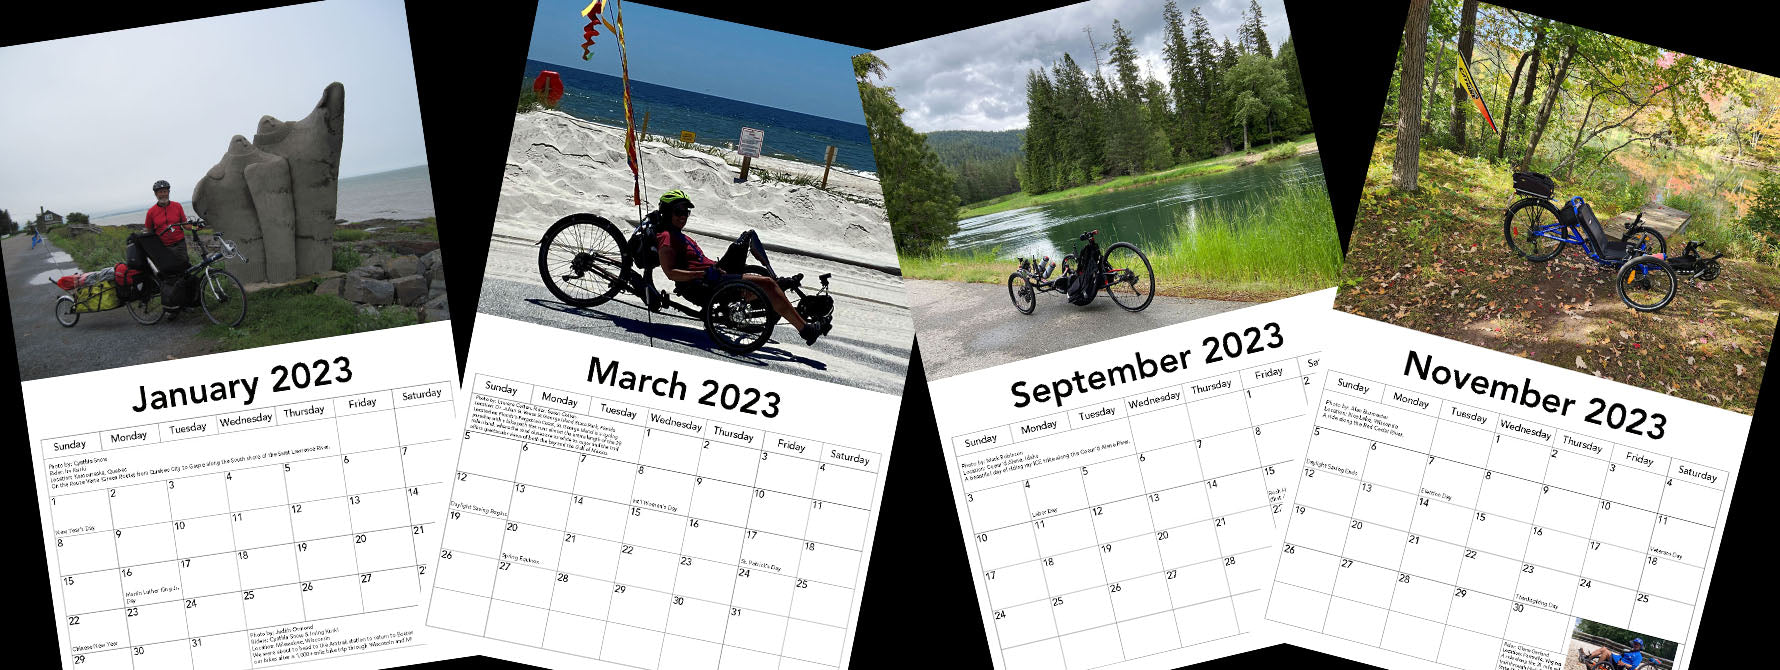 2023 Recumbent Calendar Images